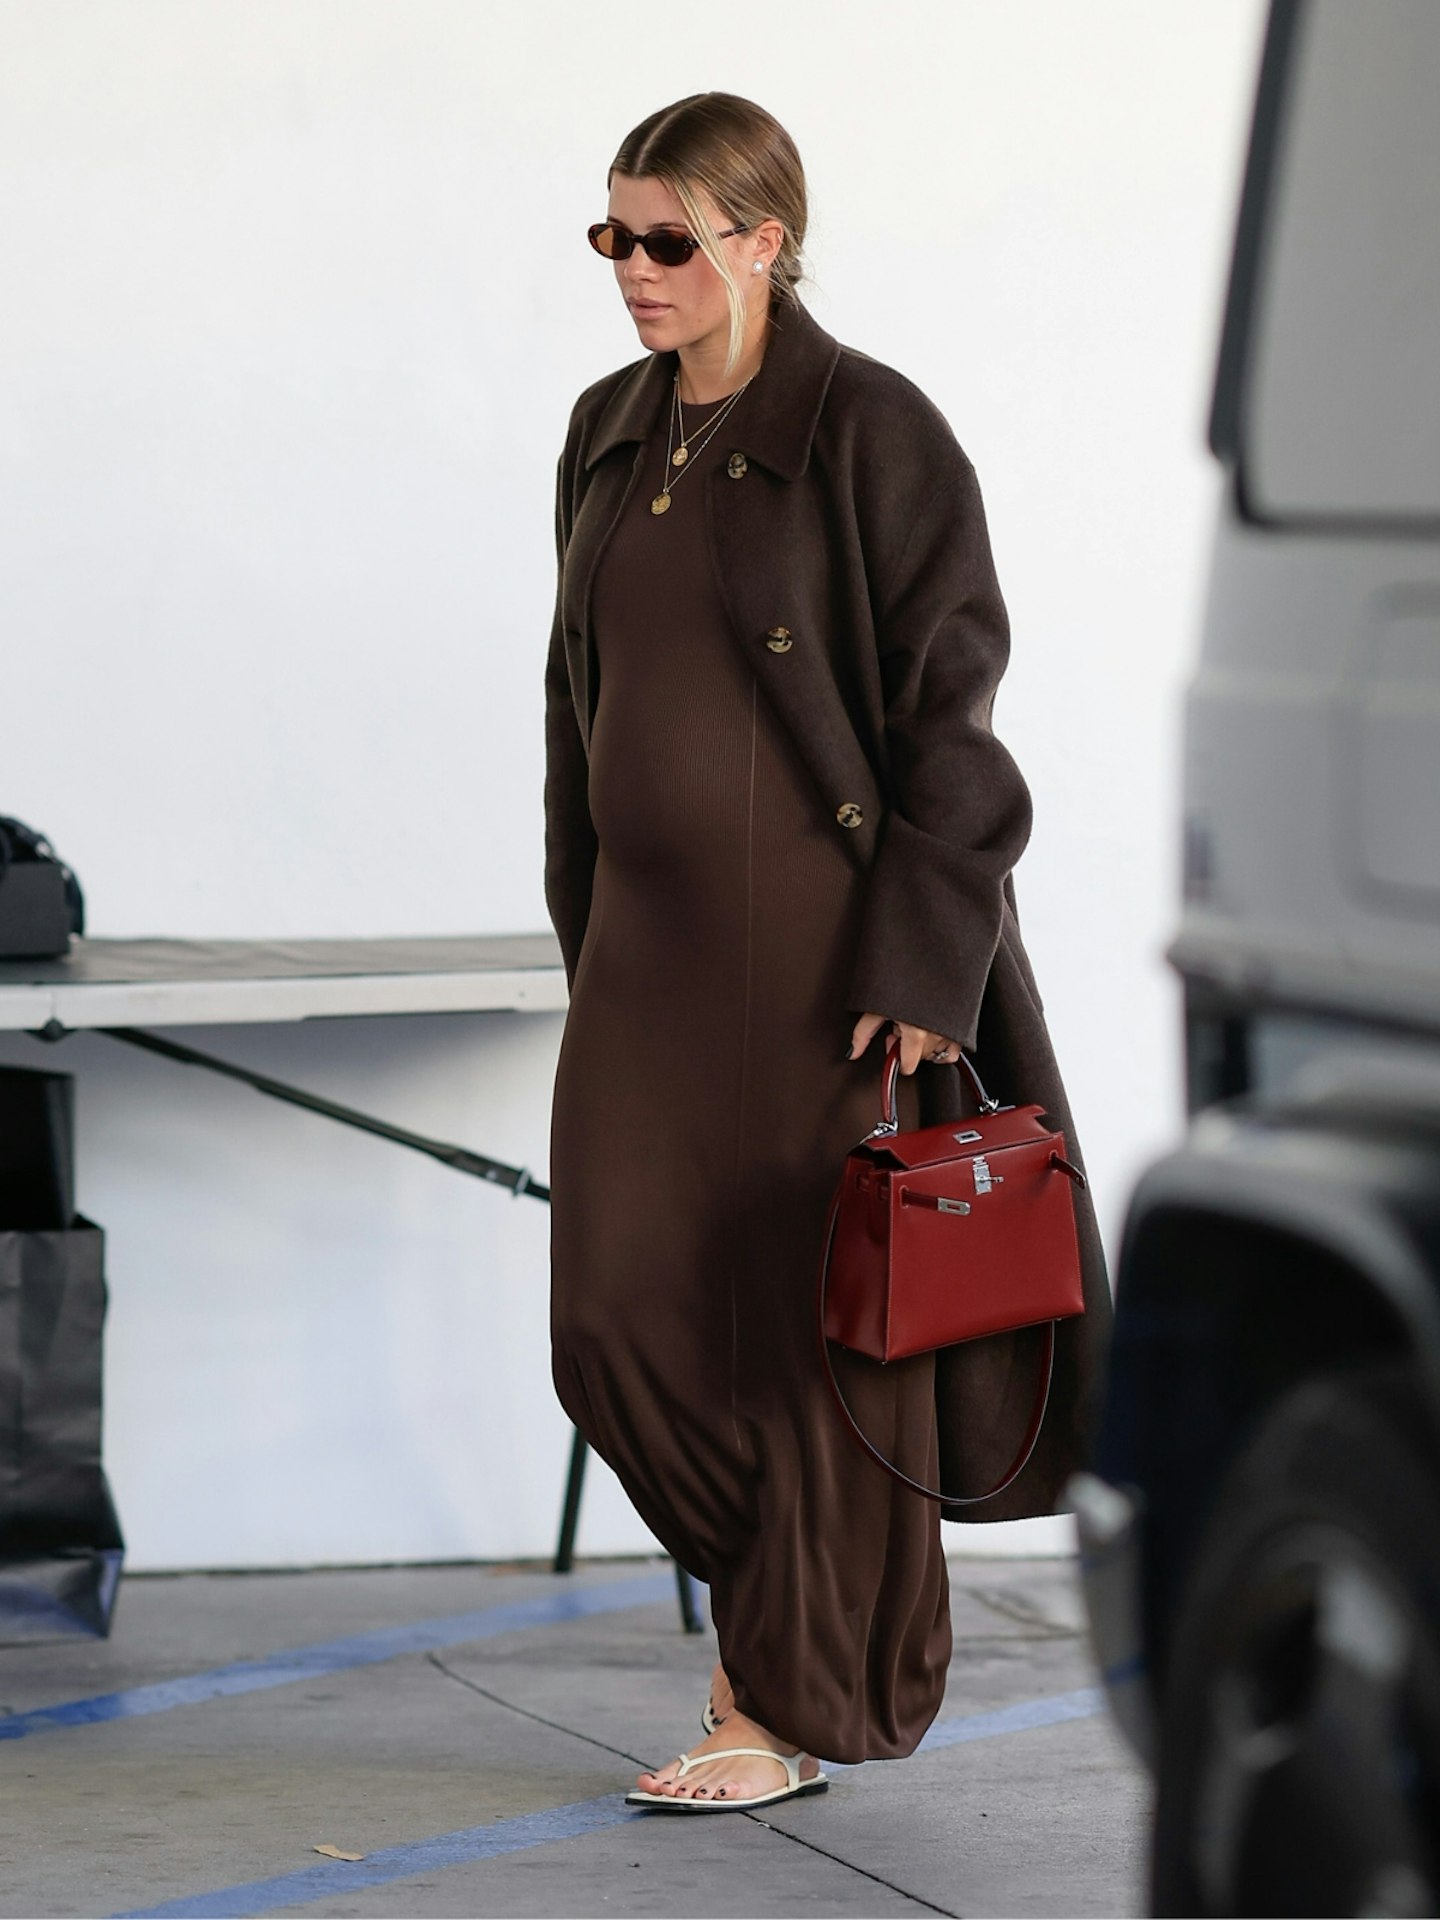 sofia-richie-pregnancy-outfit-brown-dress-1